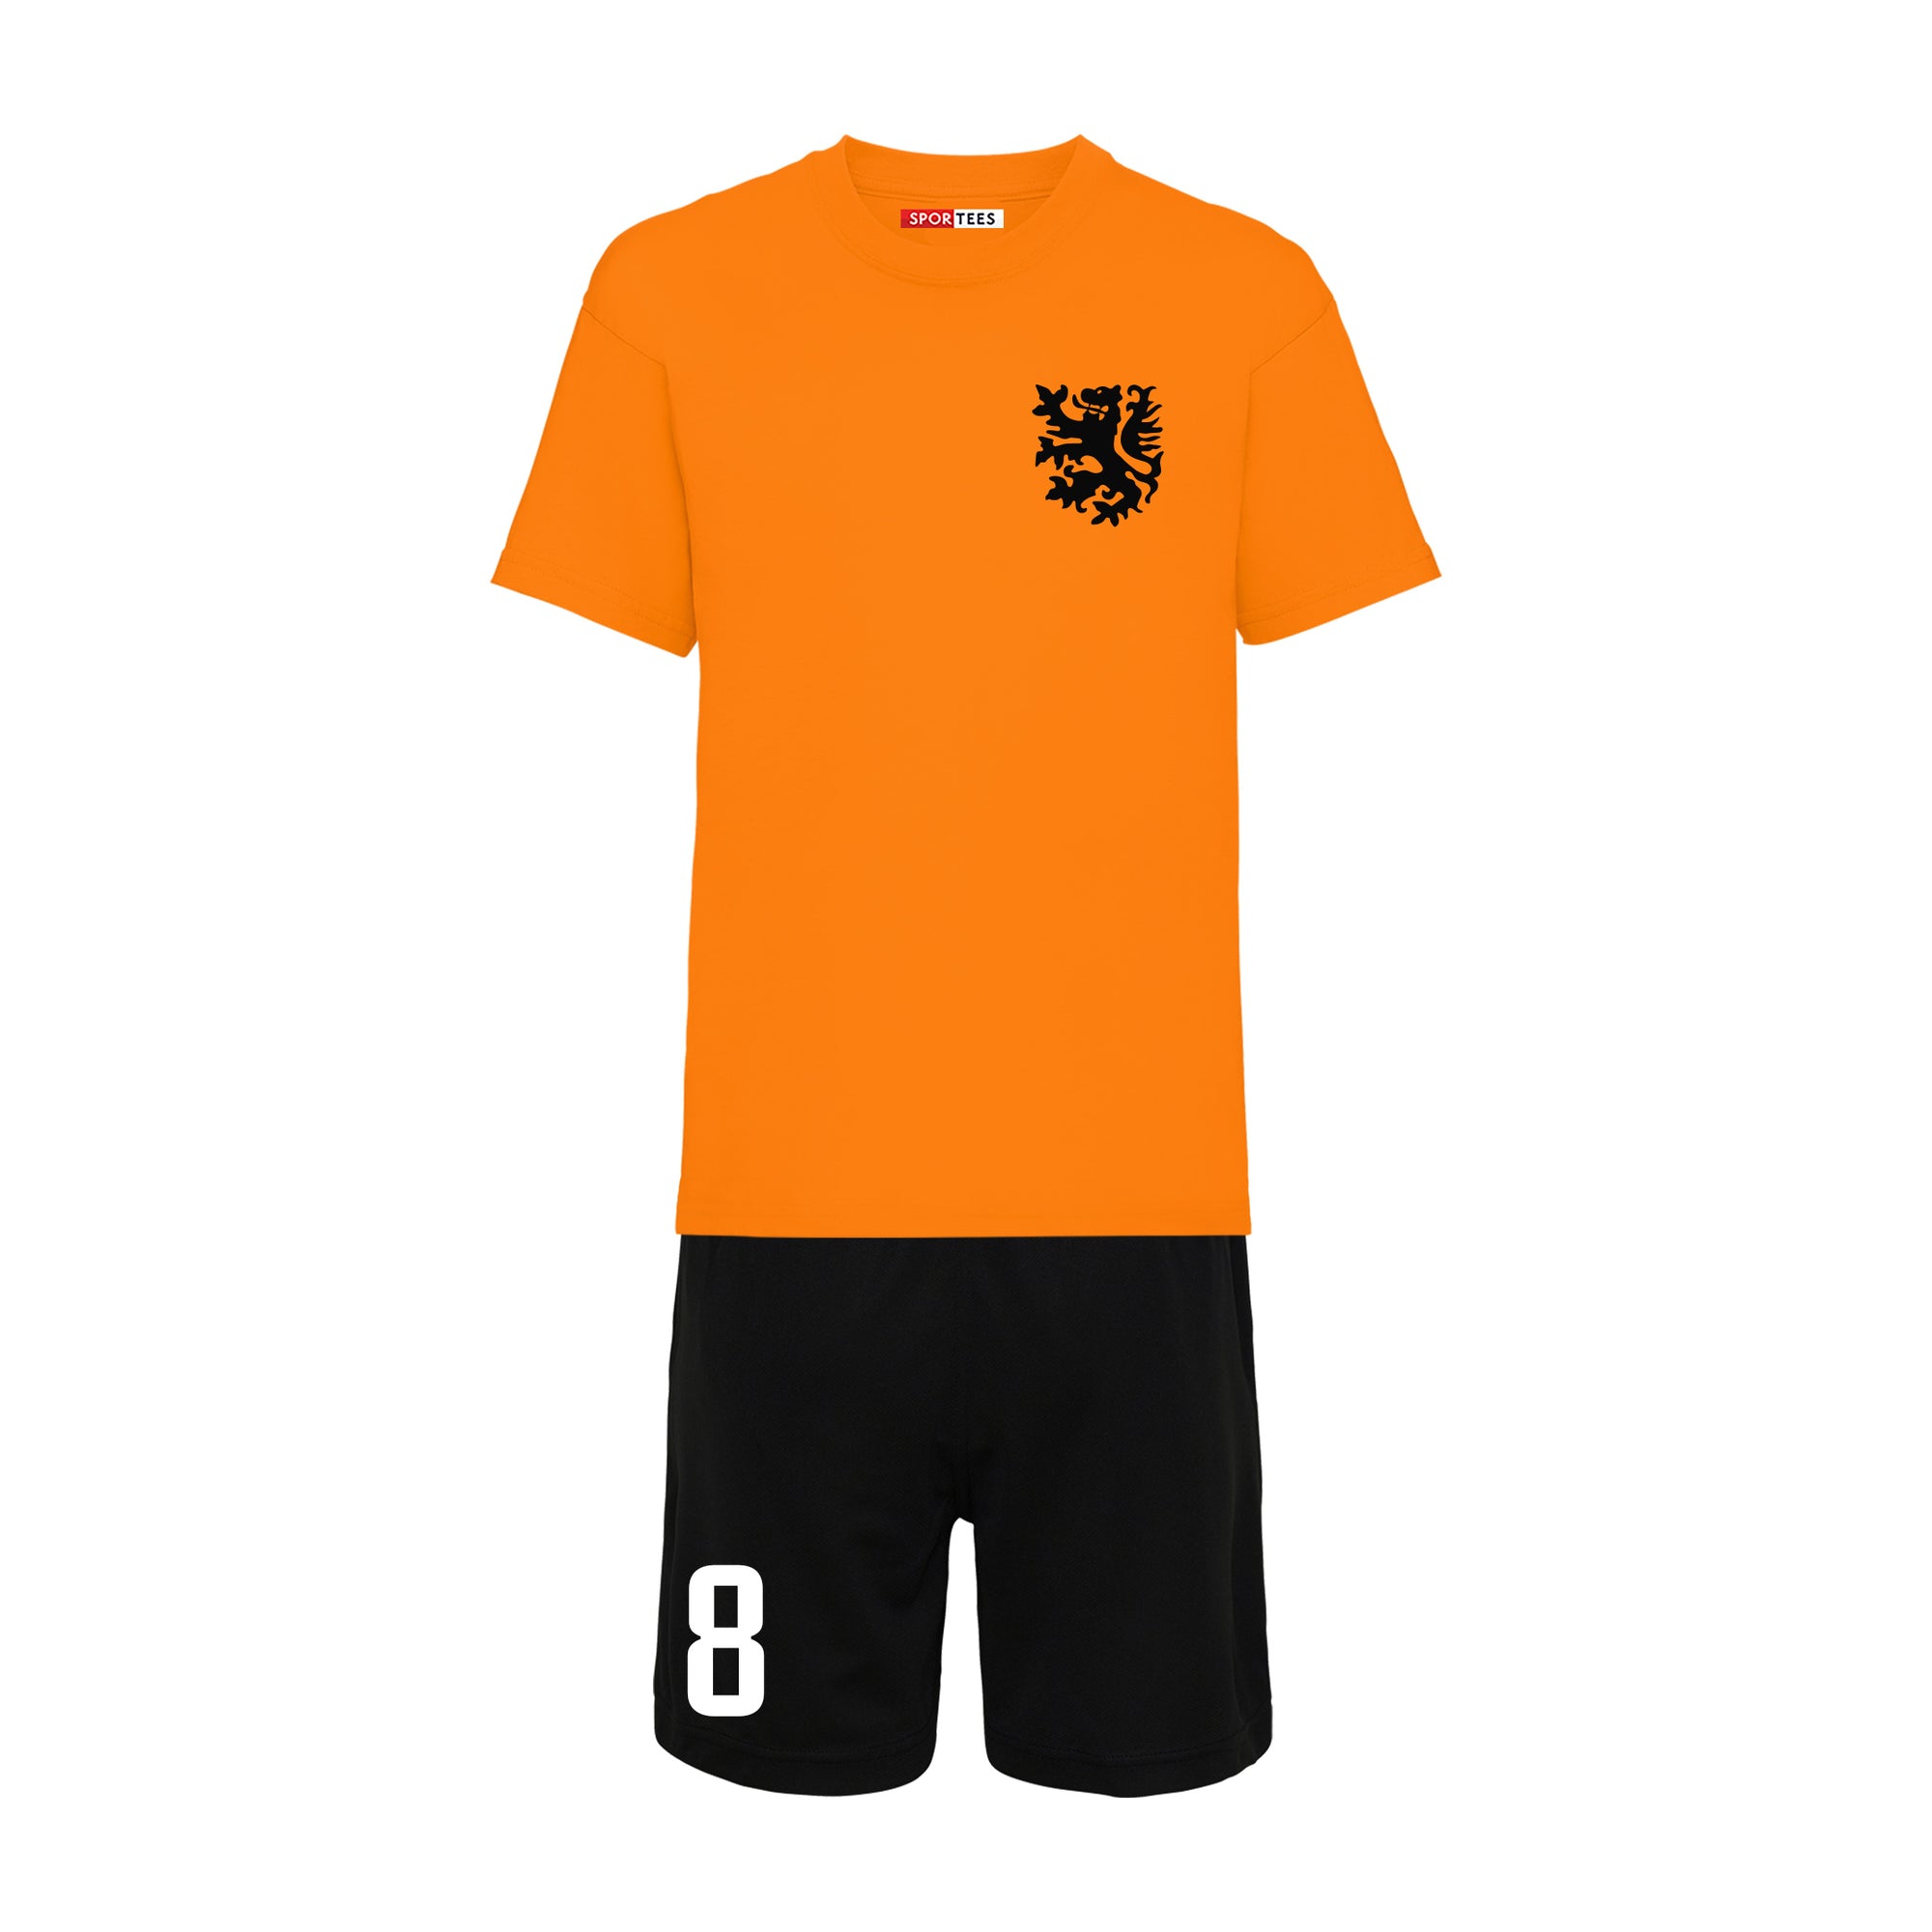 Personalised Holland Style Orange & Black Home Kit Bundle With Socks & Bag